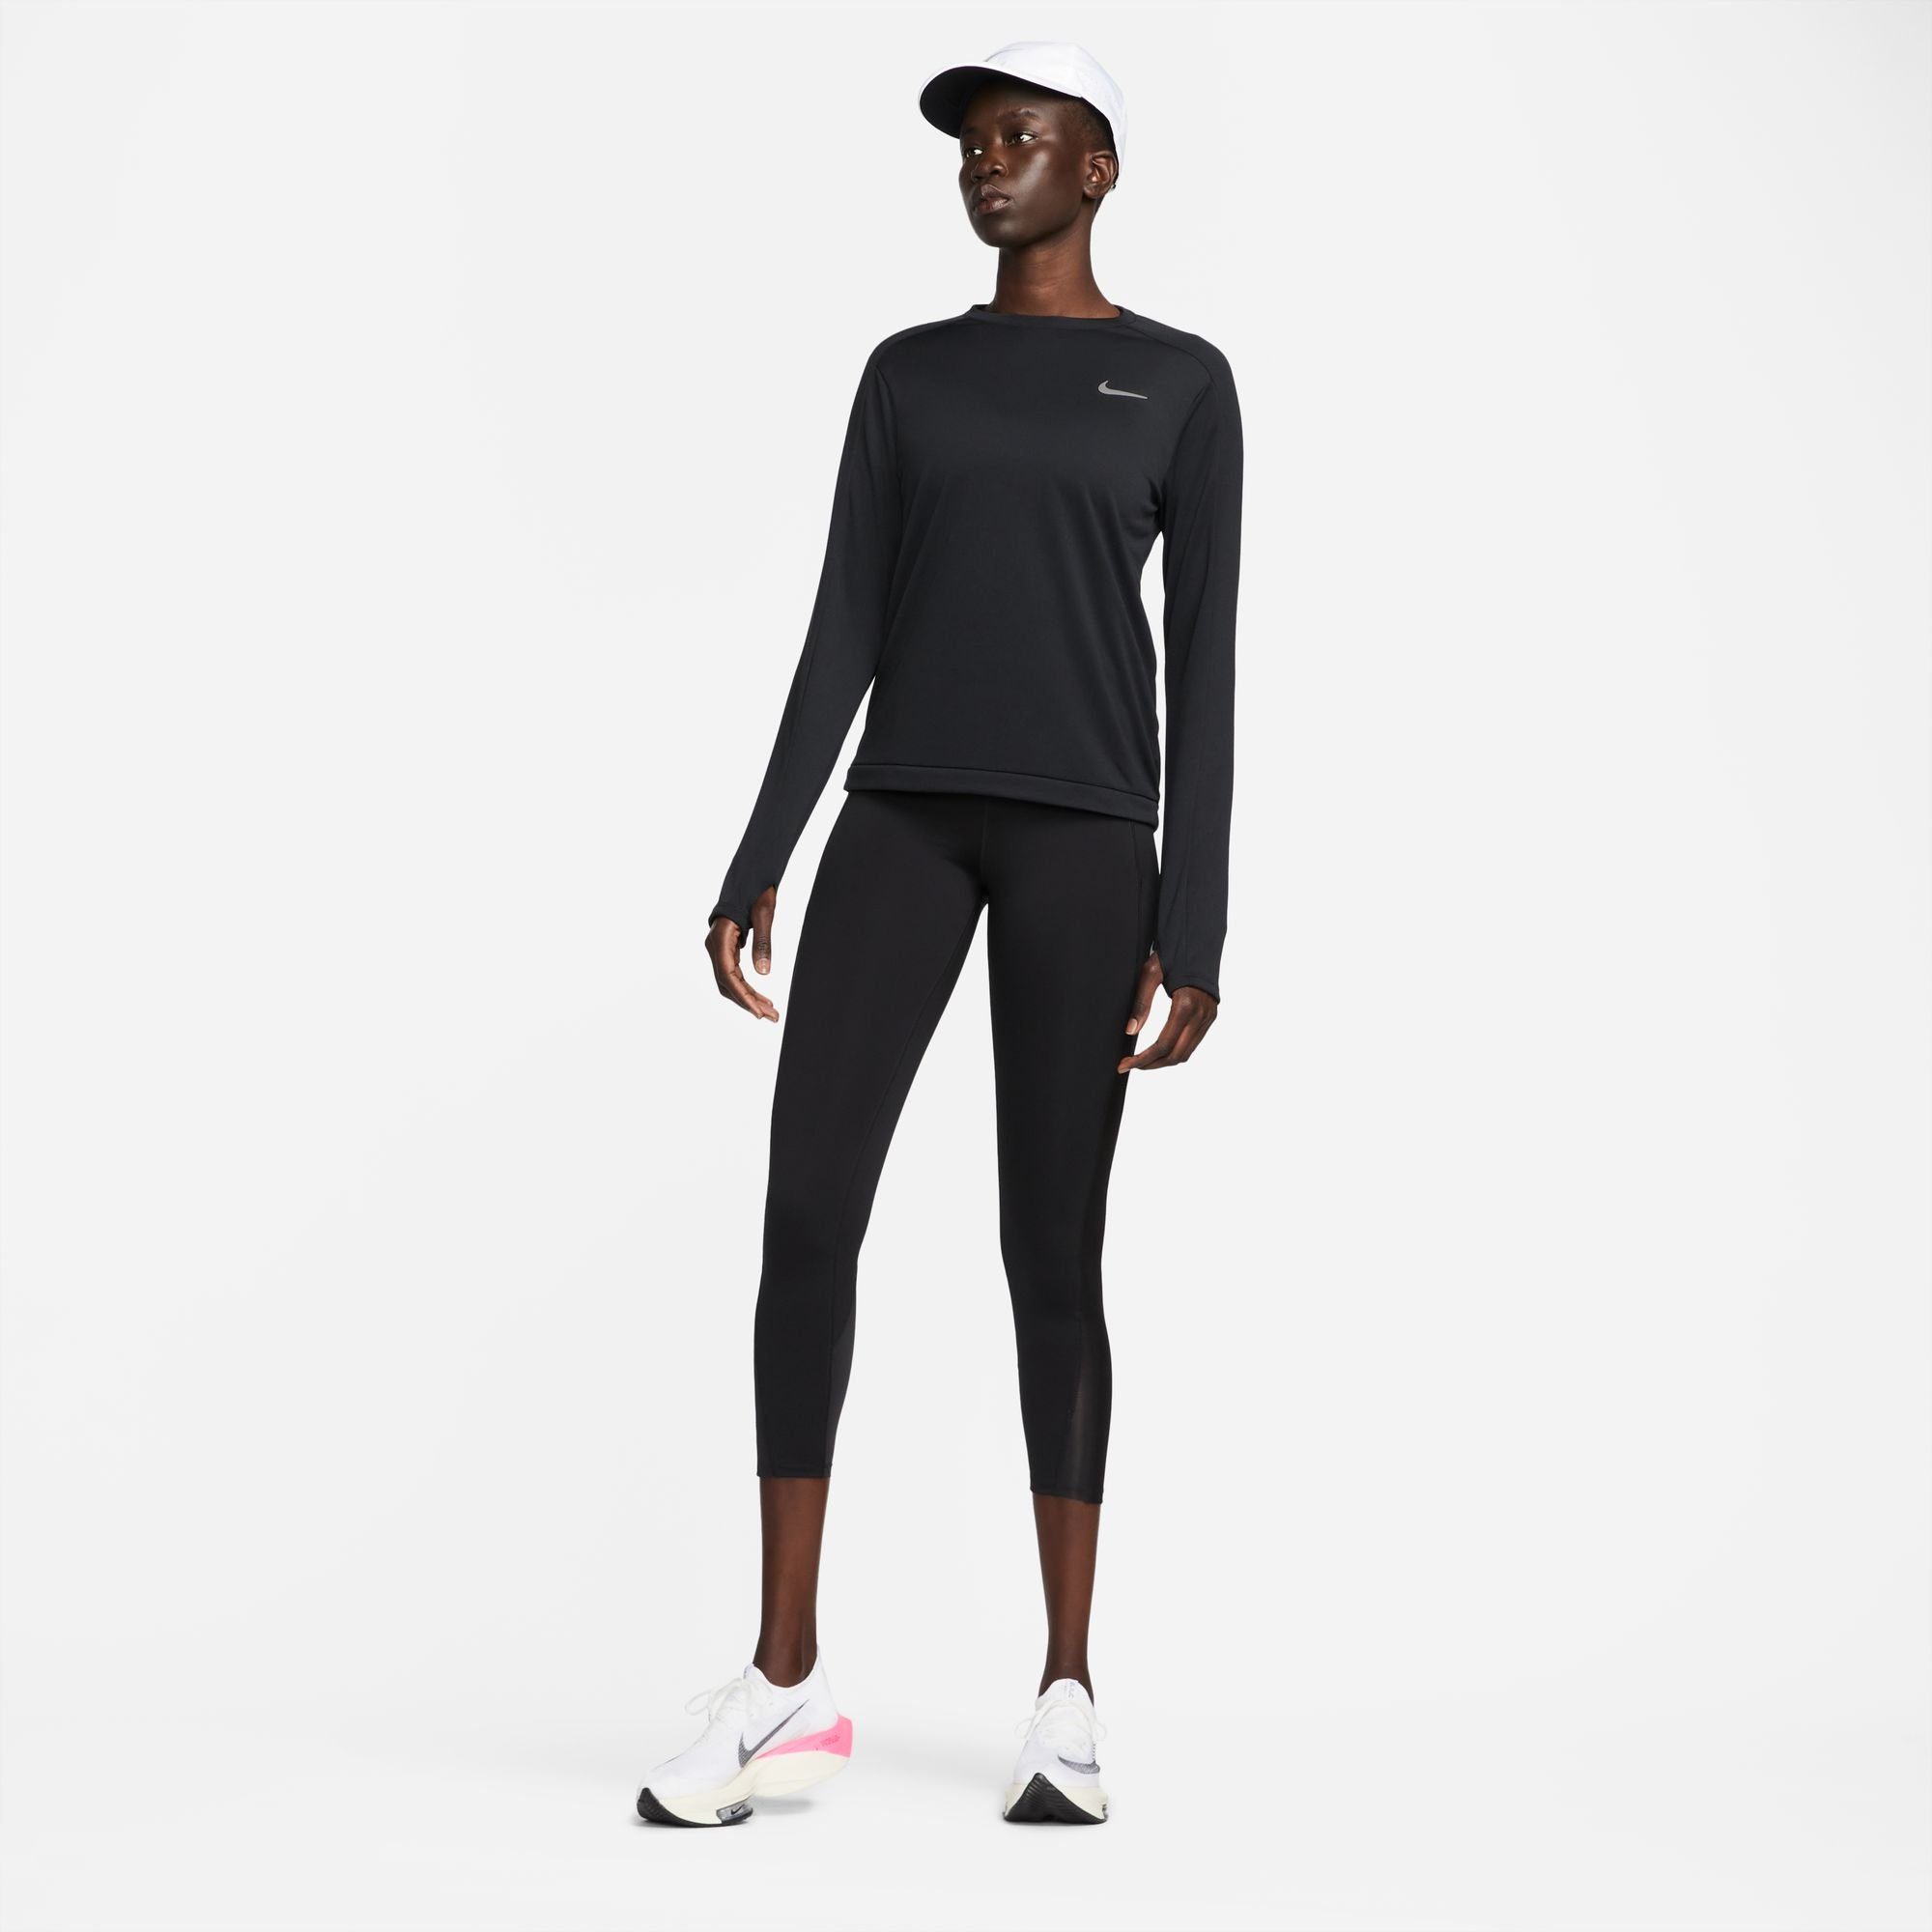 BLACK/REFLECTIVE Nike RUNNING WOMEN'S SILV Laufshirt CREW-NECK DRI-FIT TOP